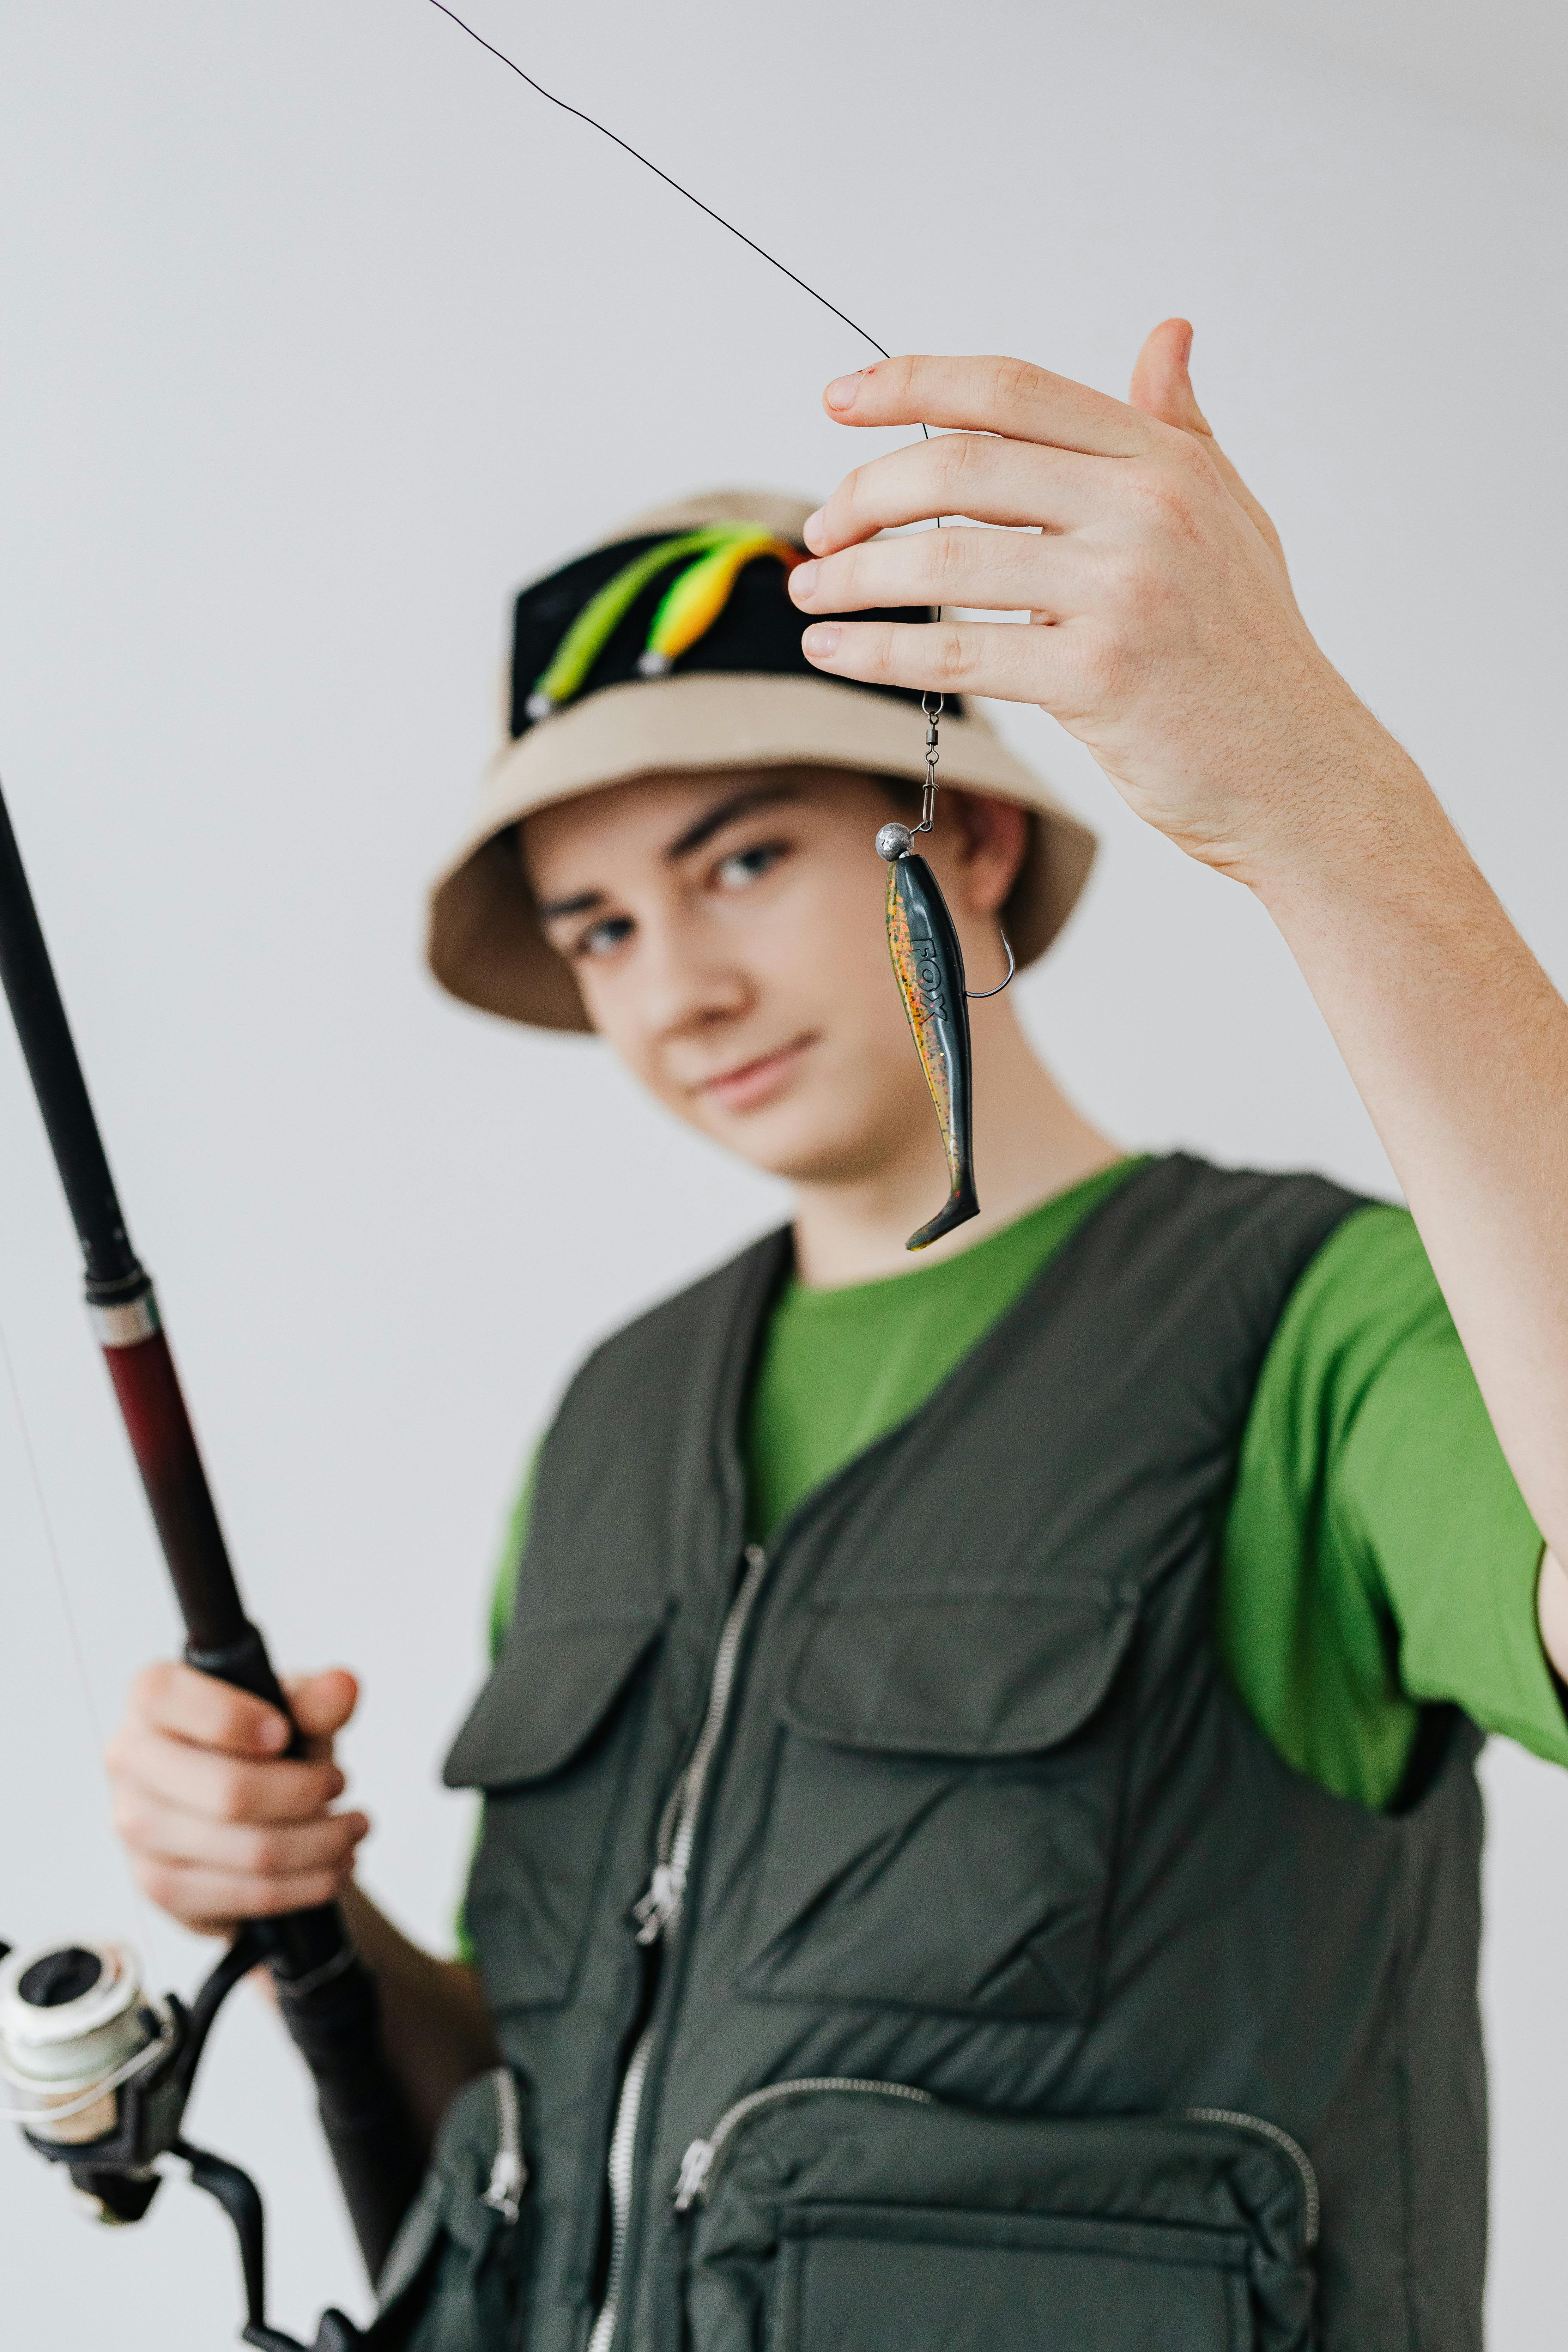 Boy Holding a Fishing Rod · Free Stock Photo